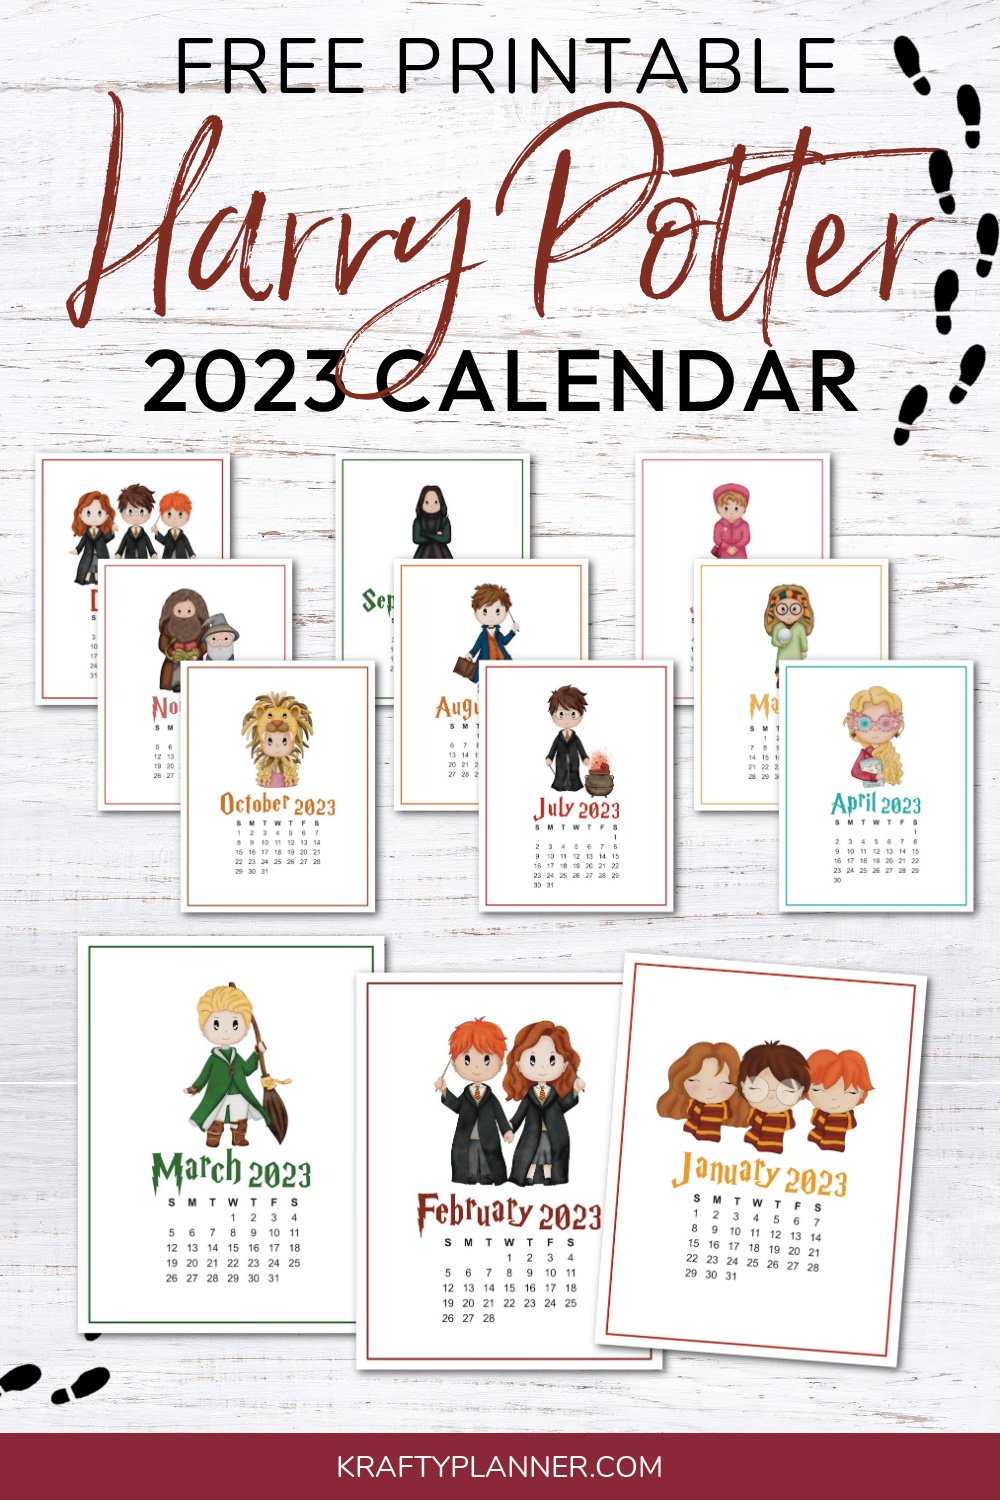 Free Printable Harry Potter 2023 Calendar